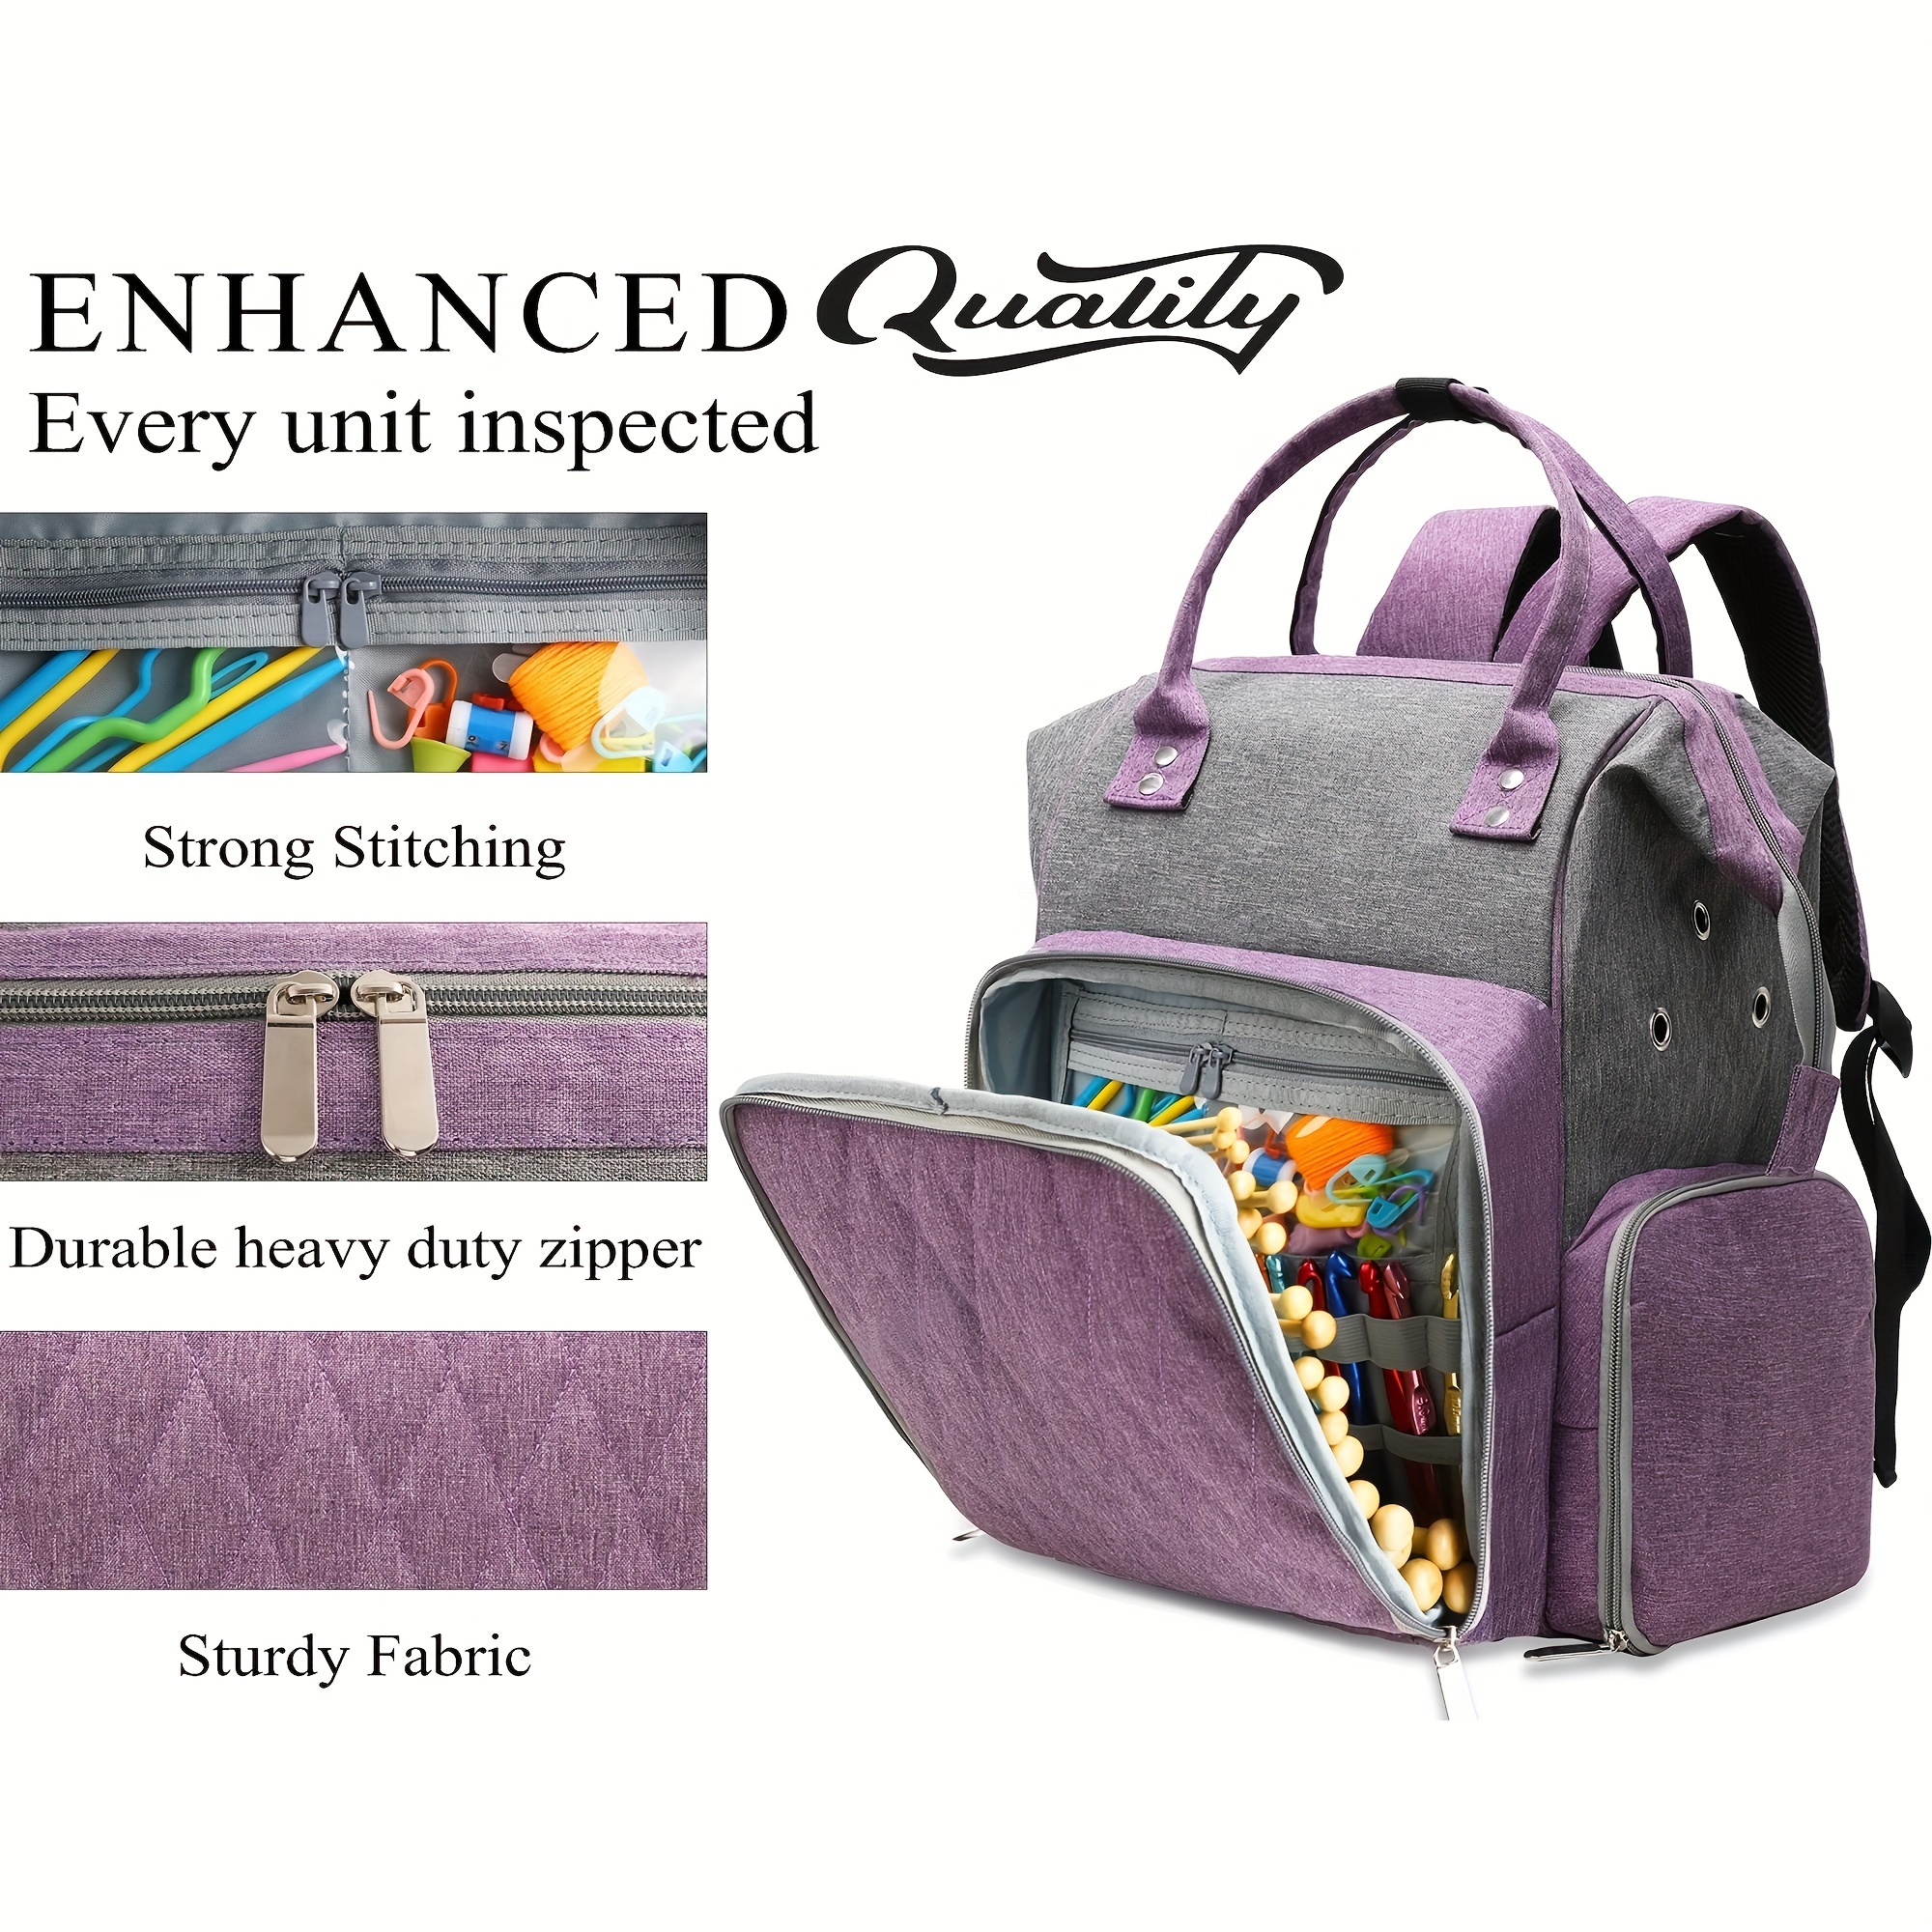 Felt Fabric - Purple, Sewing & Knitting Supplies